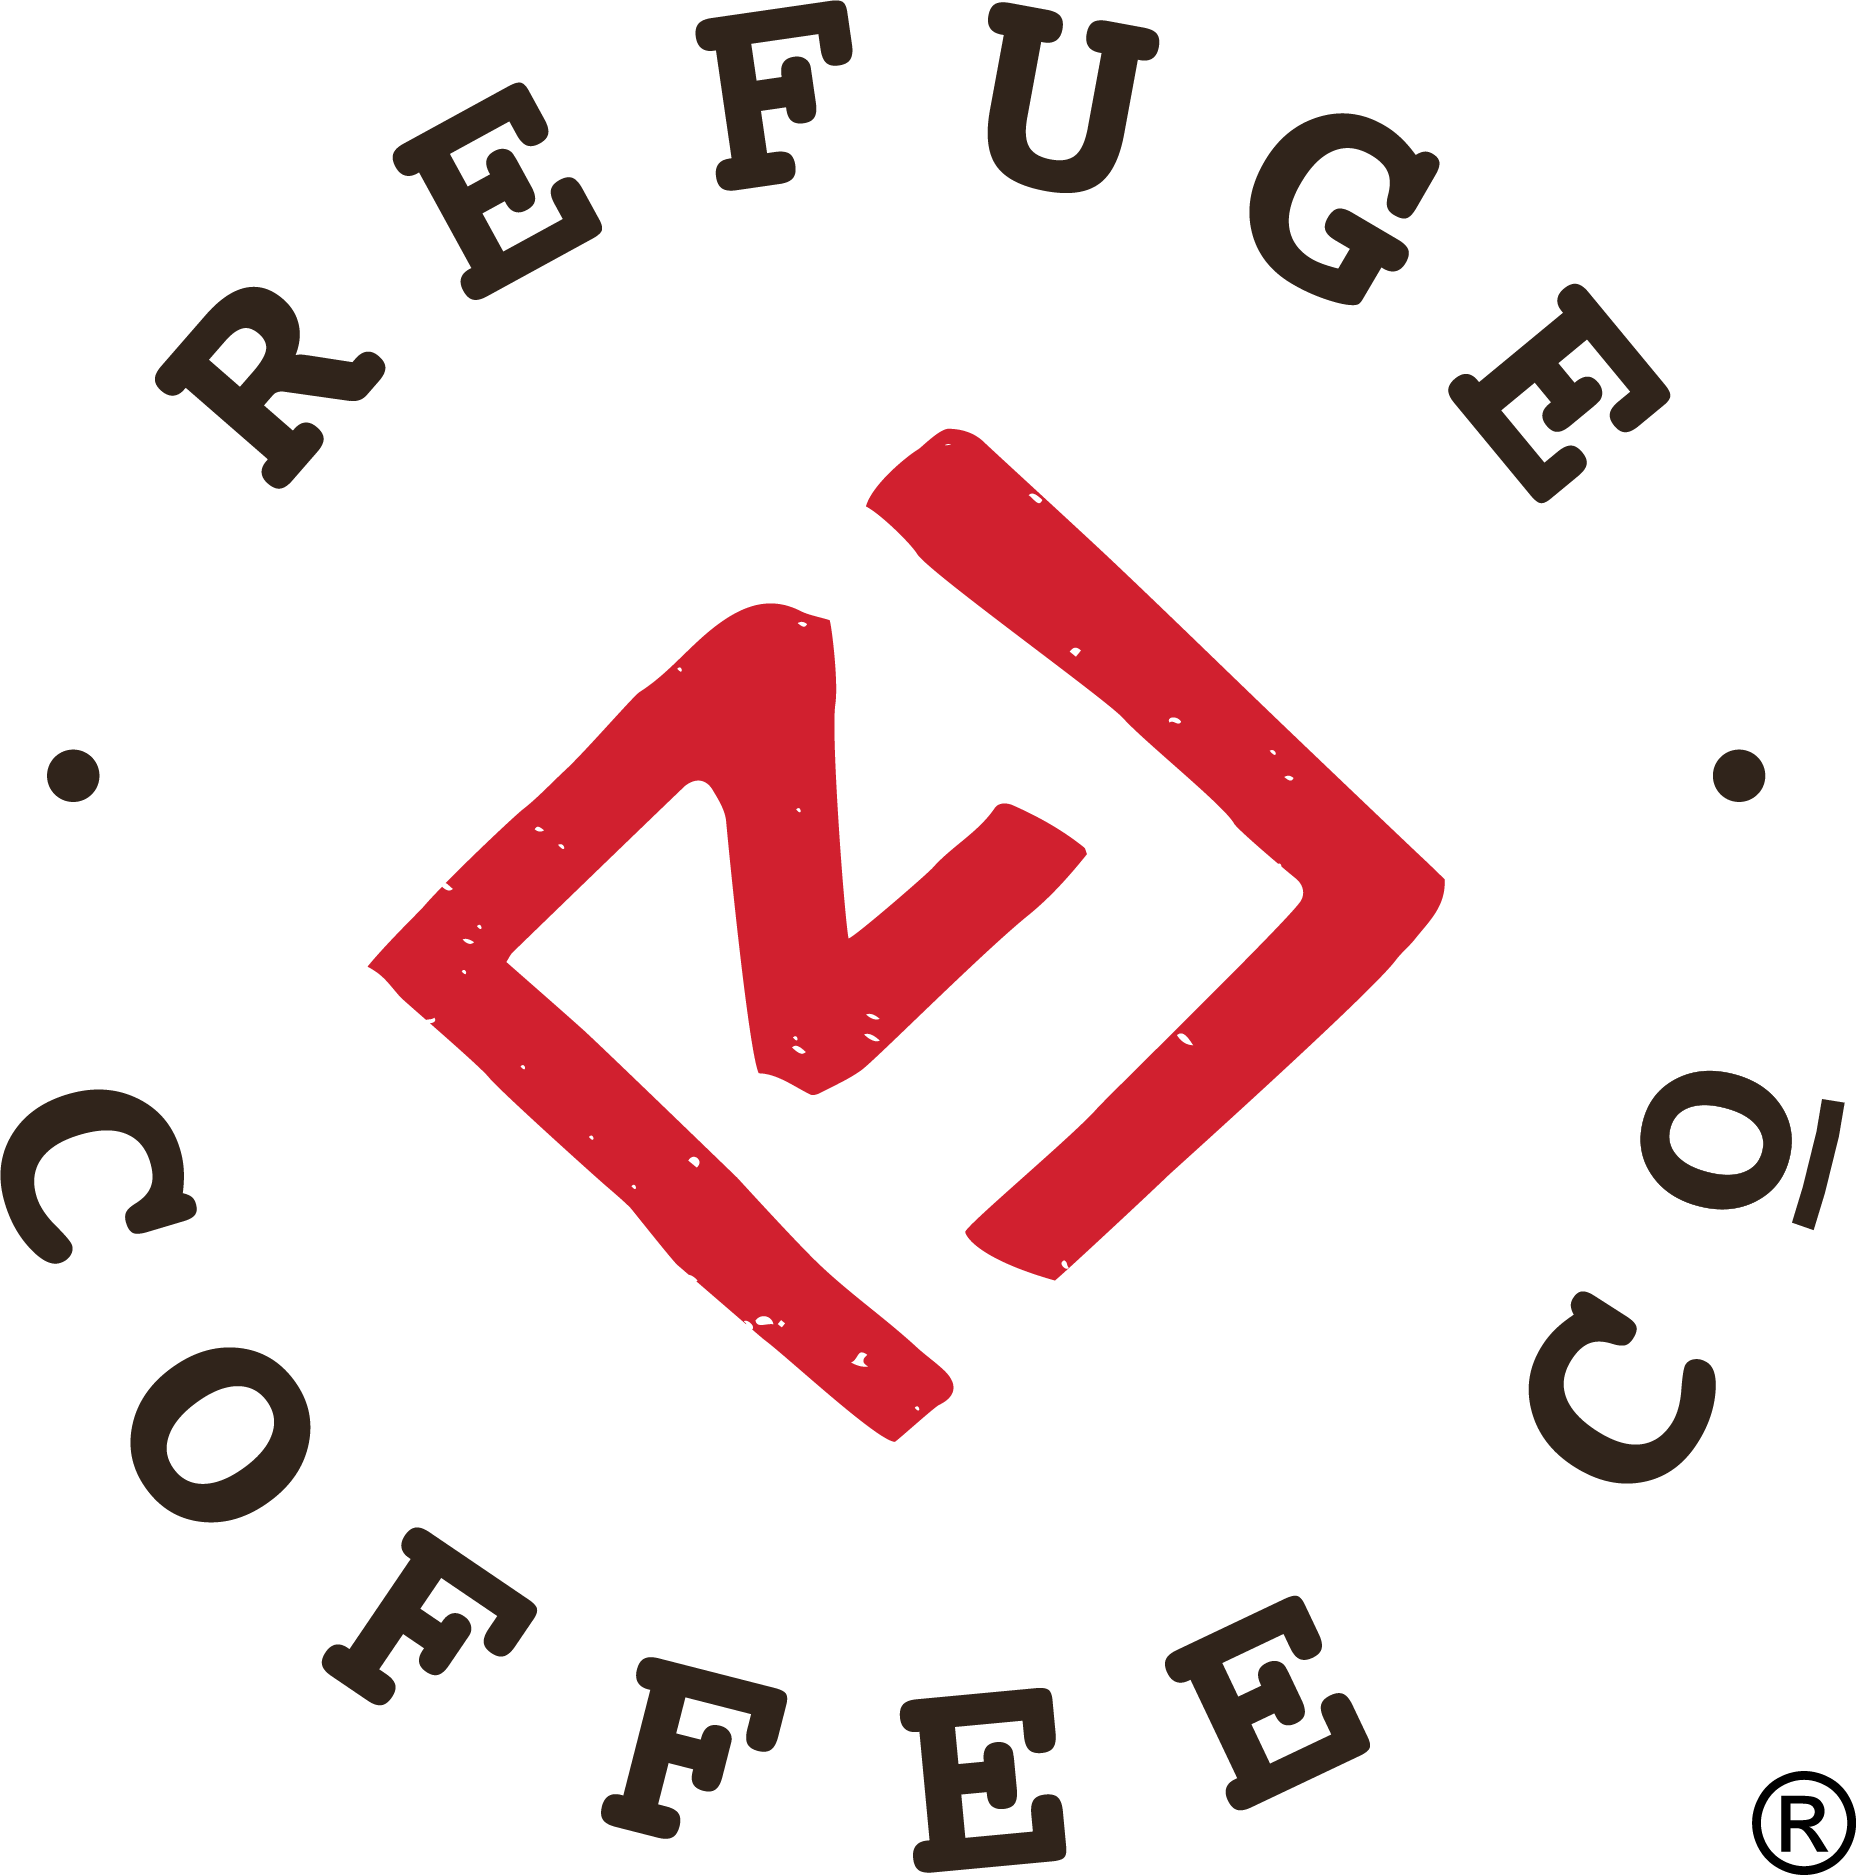 Refuge Coffee Co.